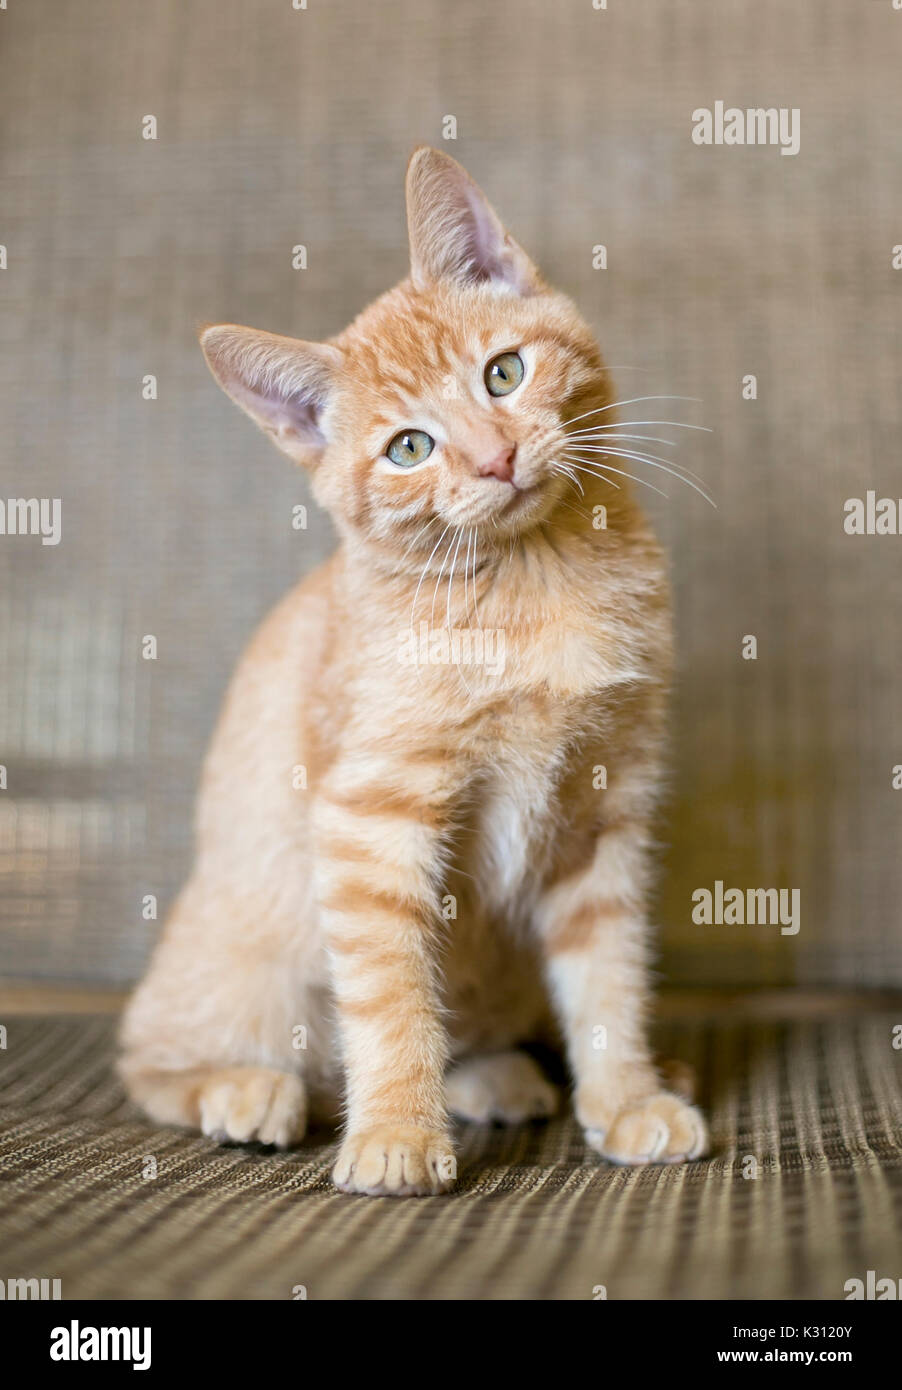 A curious orange tabby kitten listening with a head tilt Stock Photo